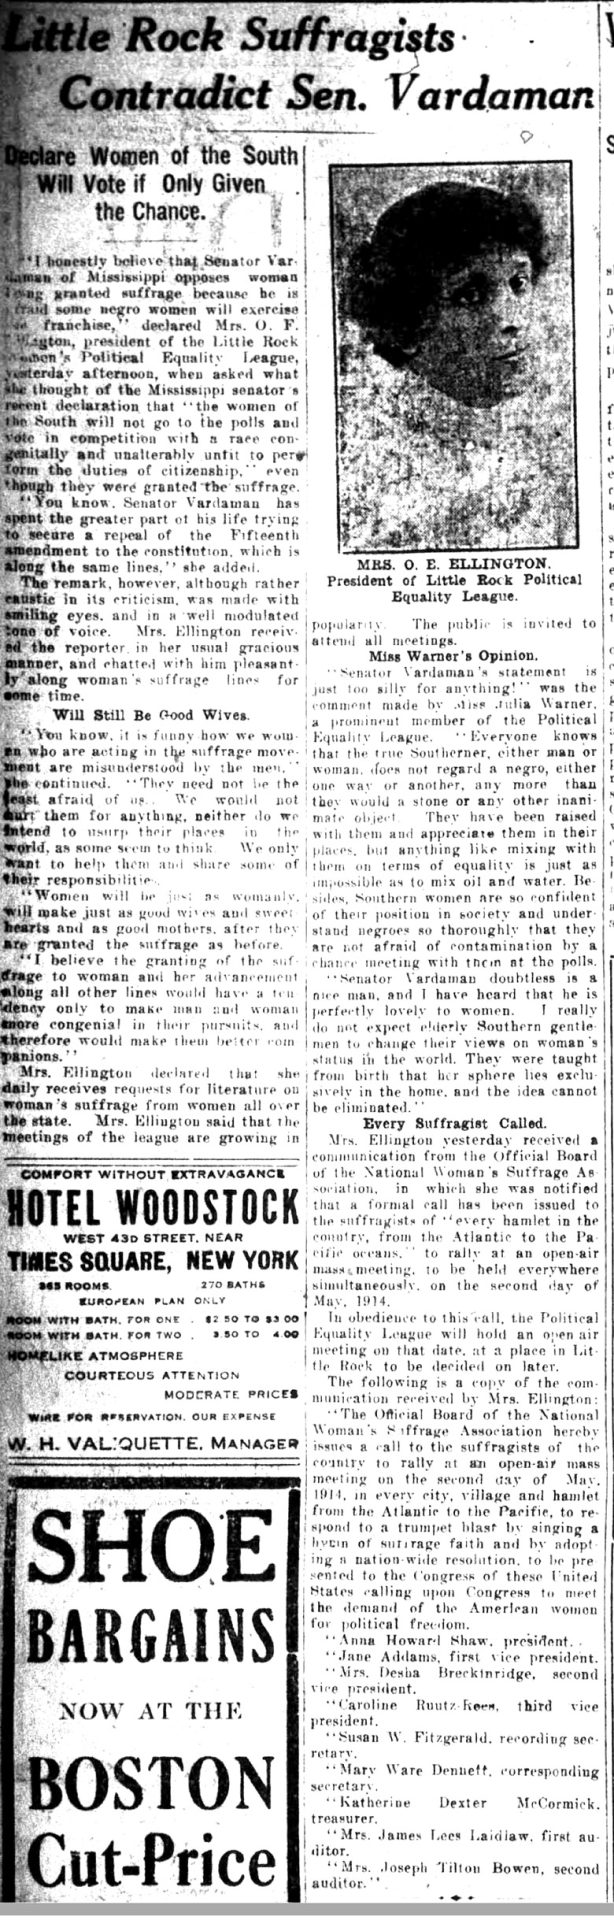 "Little Rock suffragists contradict Senator Vardaman" newspaper clipping